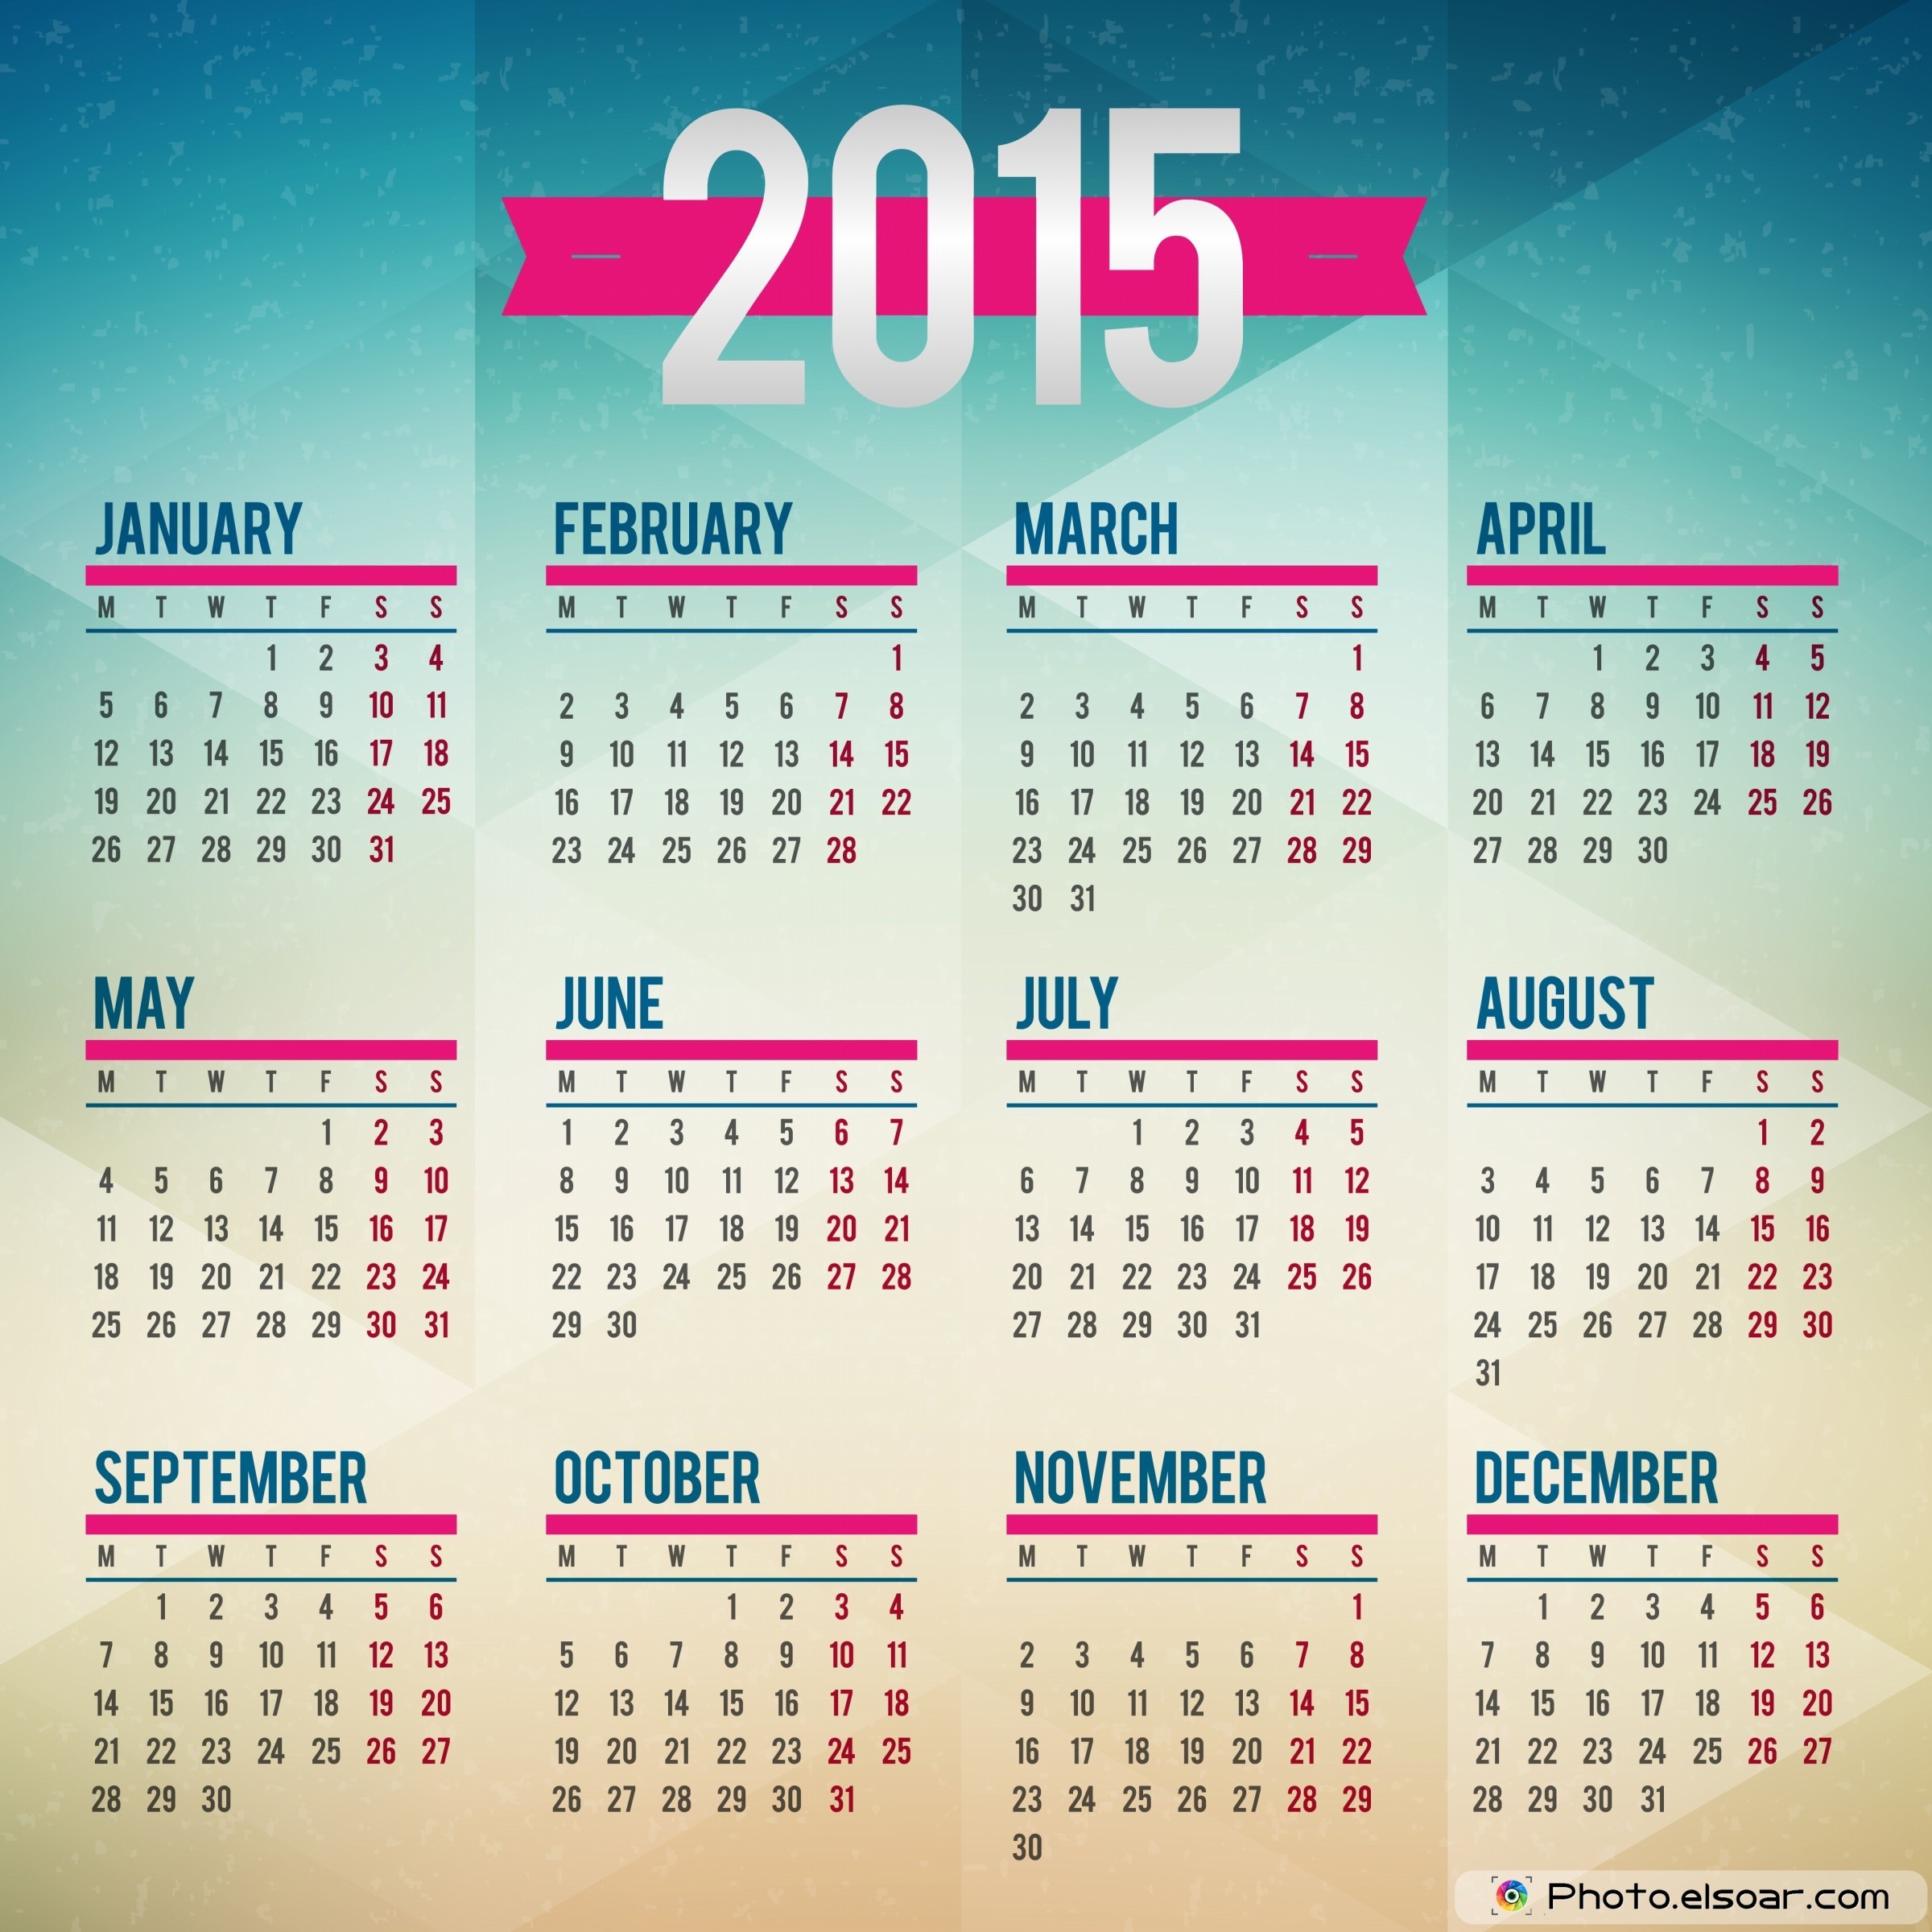 Design Printable Calendar 12 2015 Calendars – Distinctive Designs Free for All